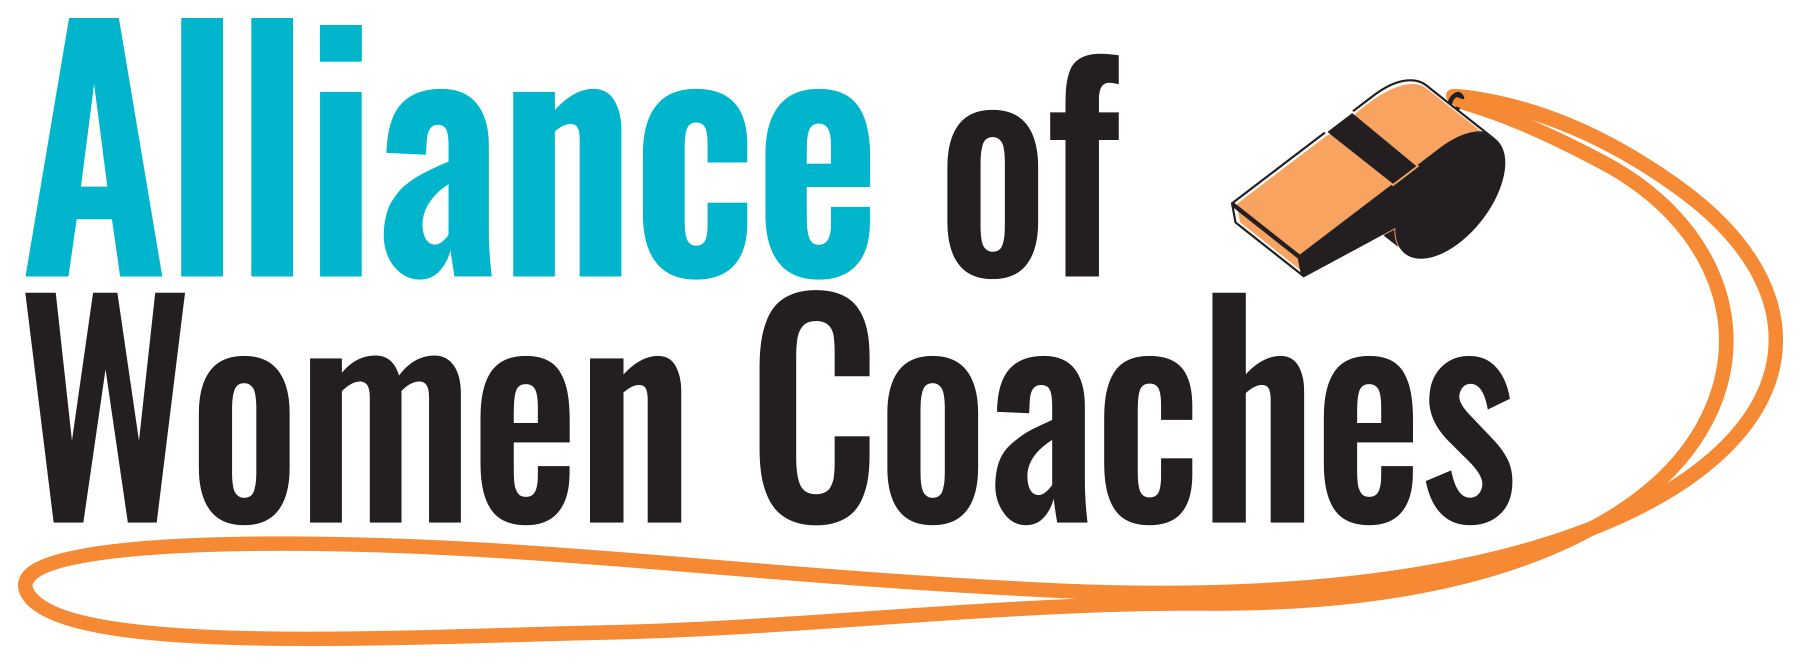 Coaches Logo - alliance-of-women-coaches-logo - Colorado Rapids Youth Soccer Club